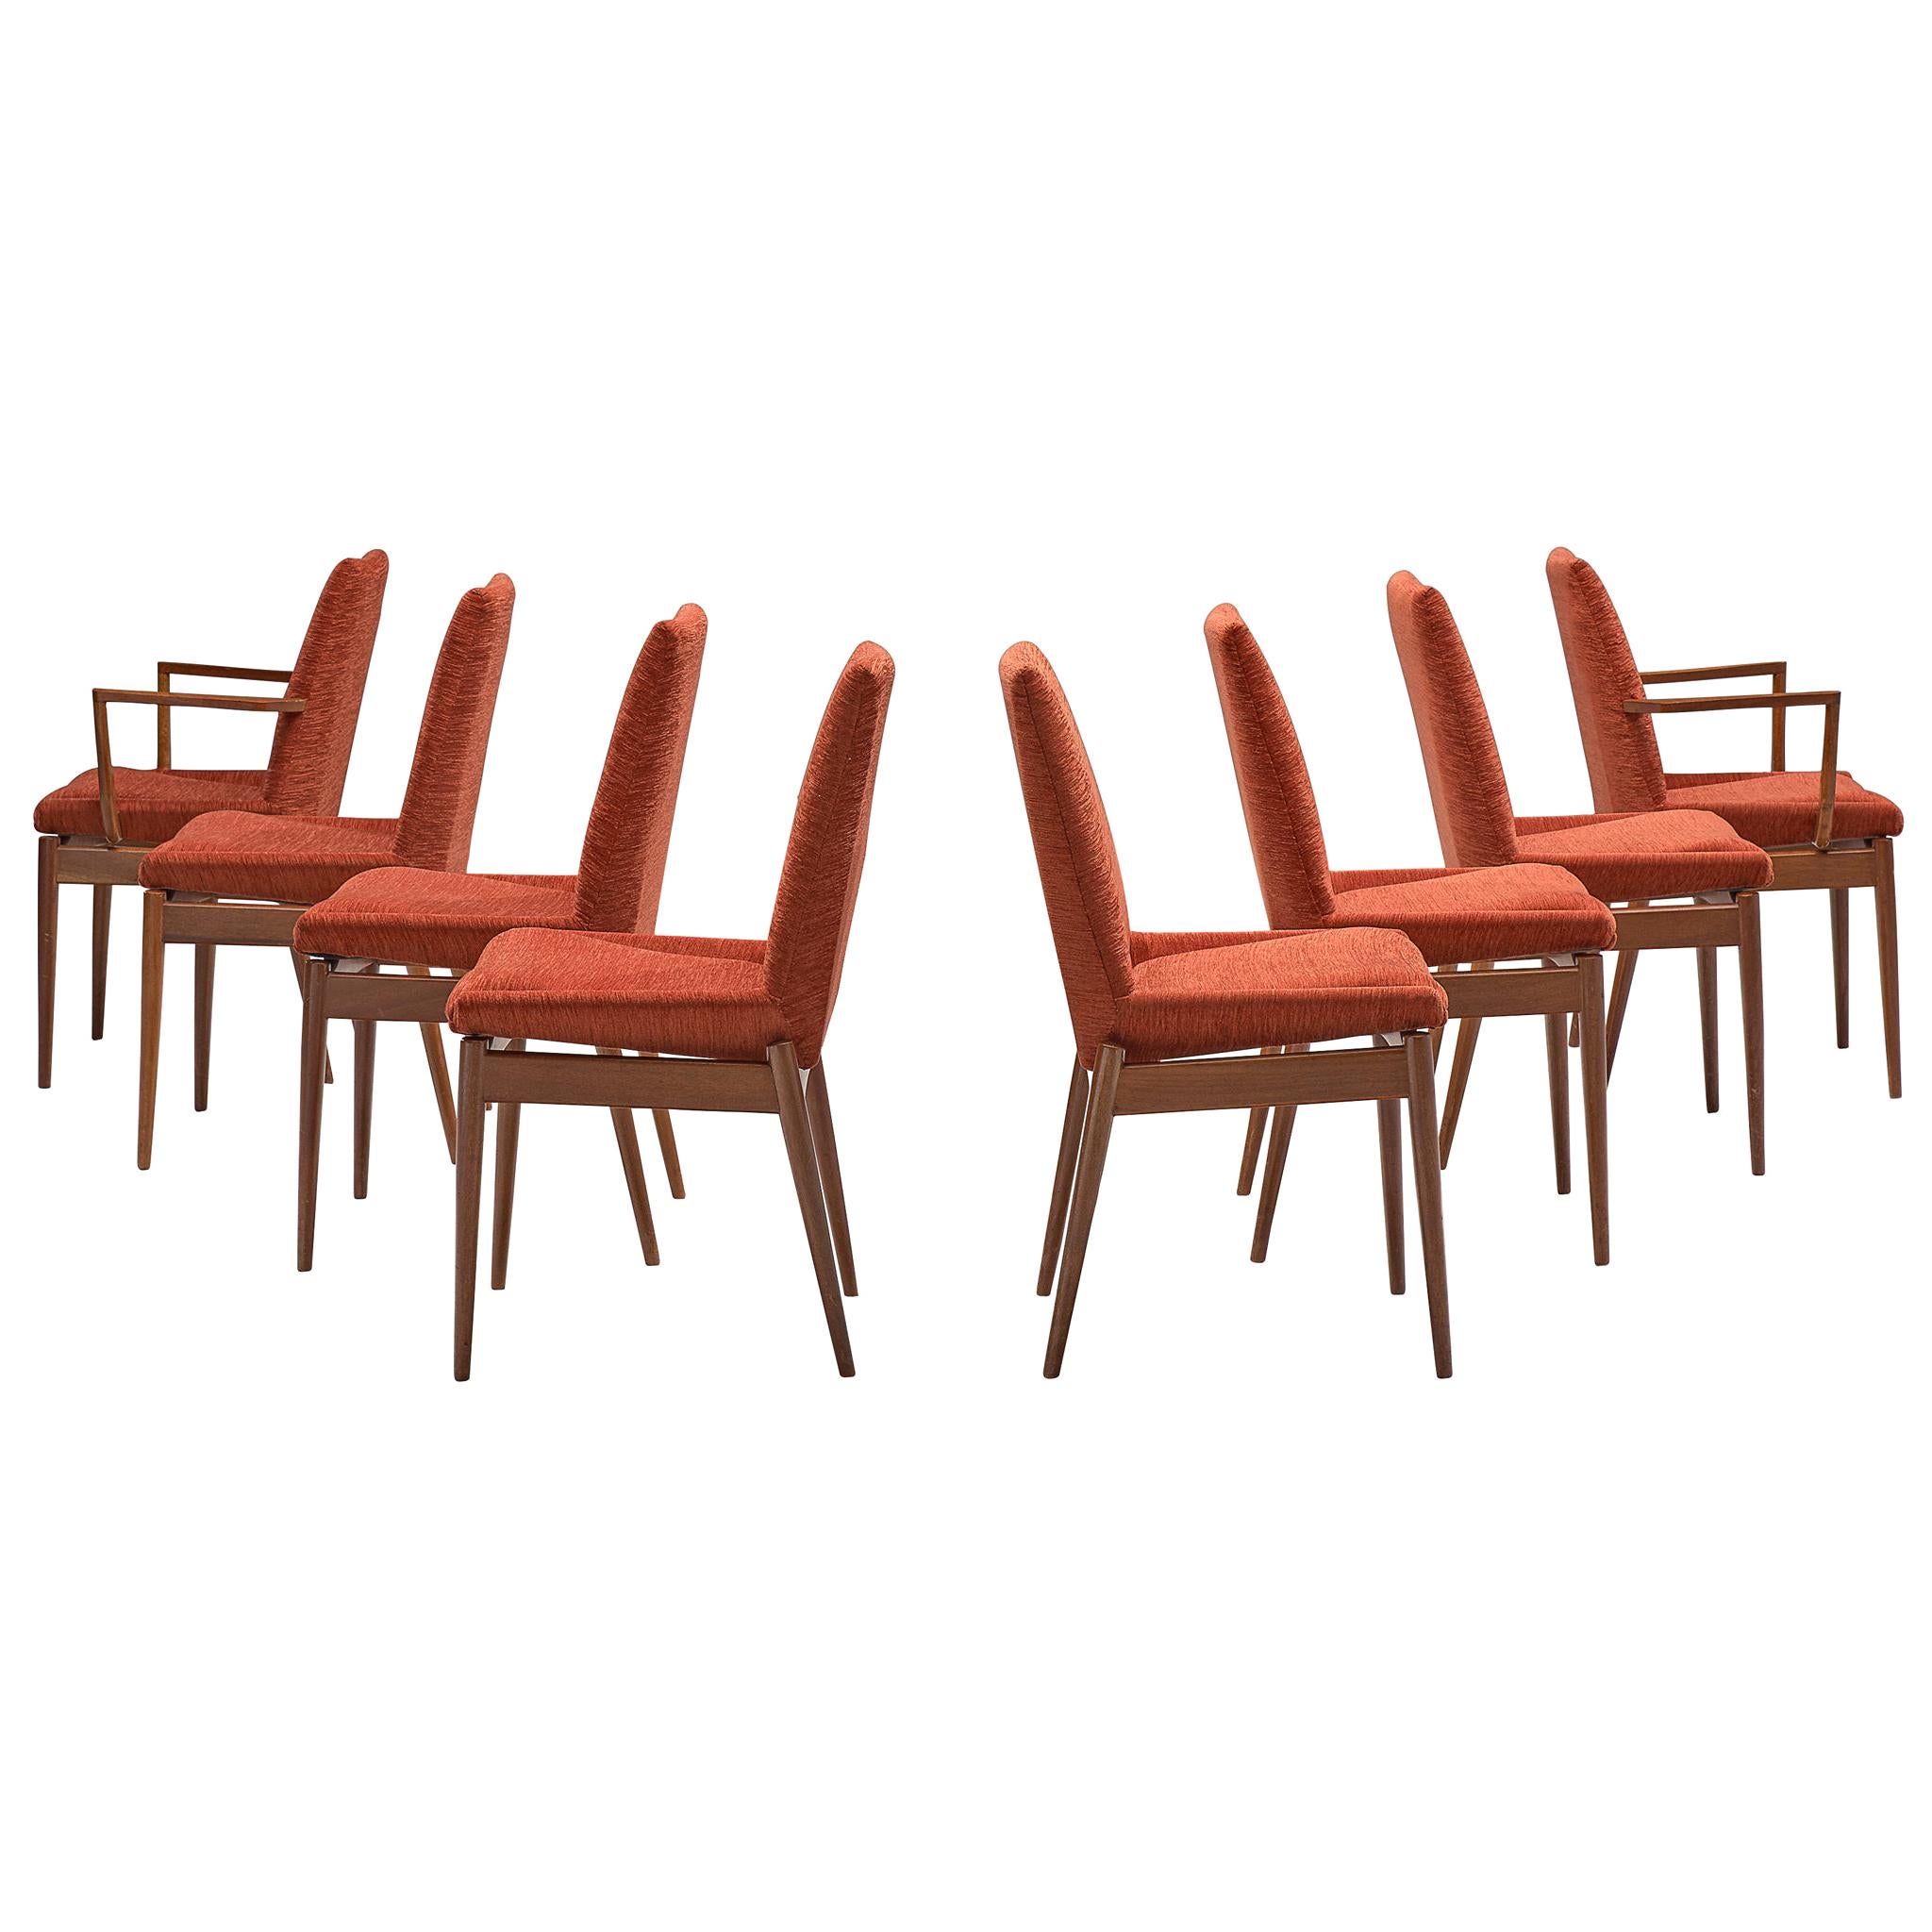 Scandinavian Chairs in Teak and Terracotta Corduroy